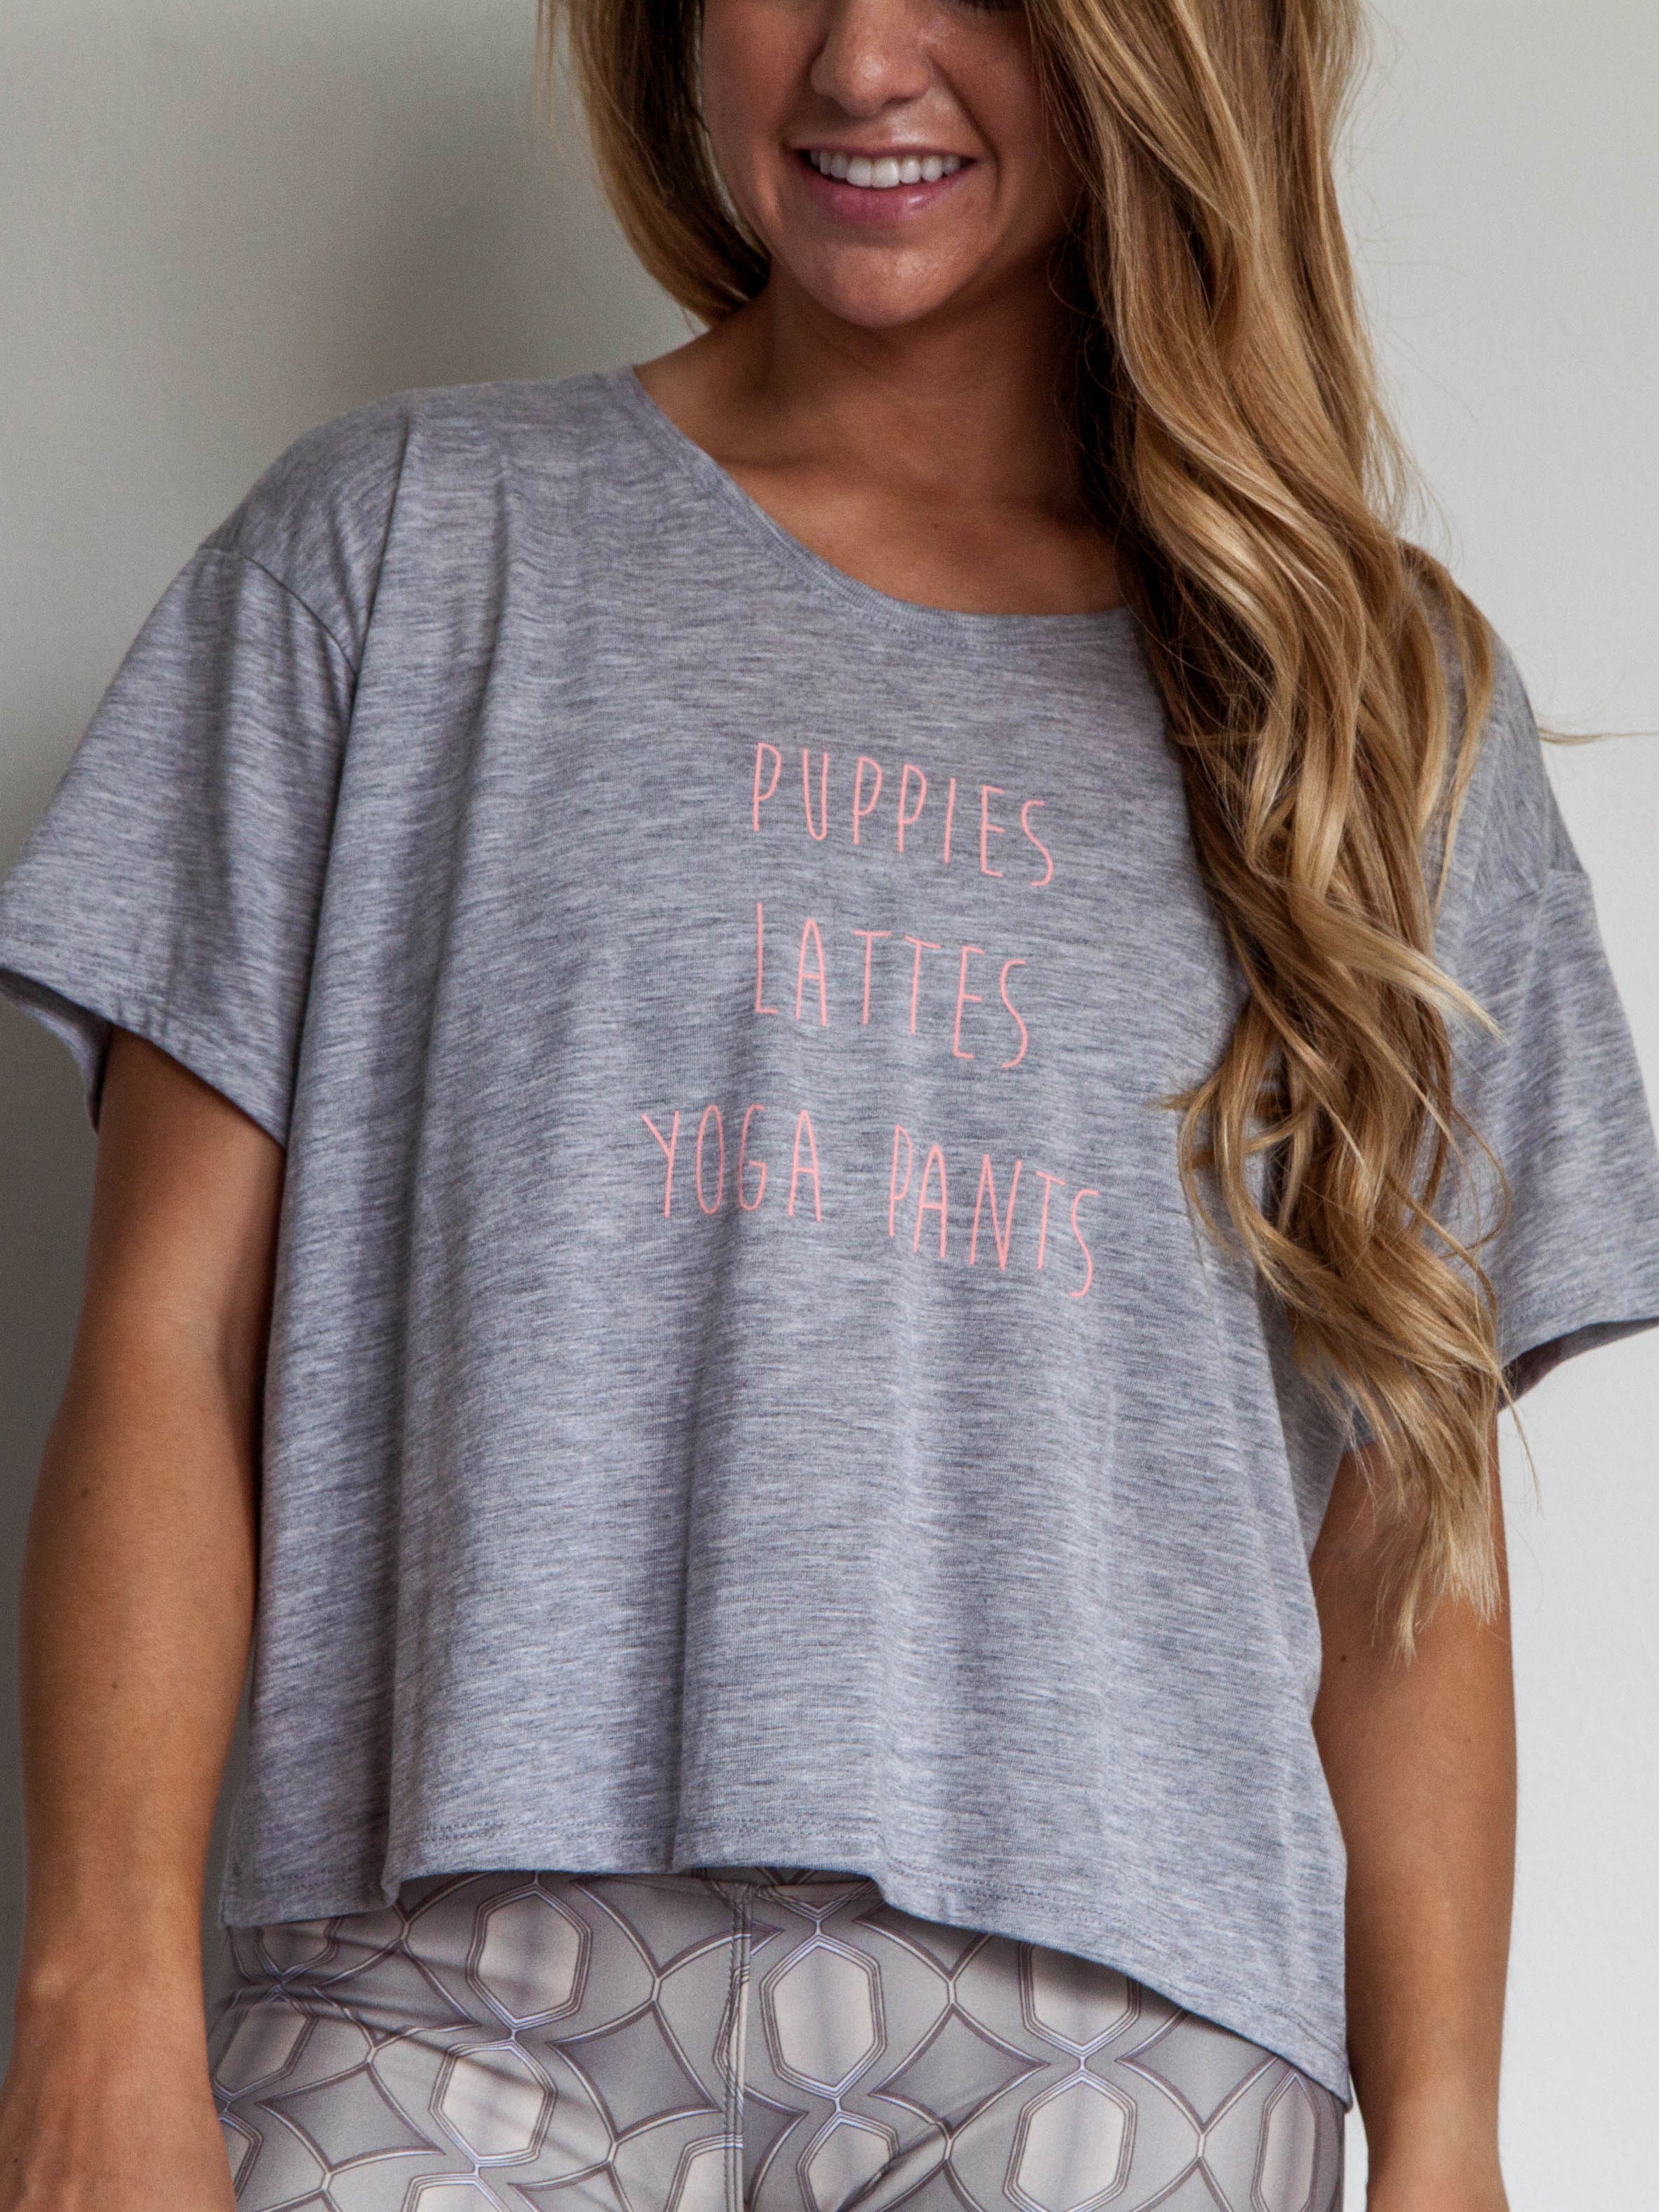 Graphic Tee "Puppies. Lattes. Yoga Pants." Heather Grey